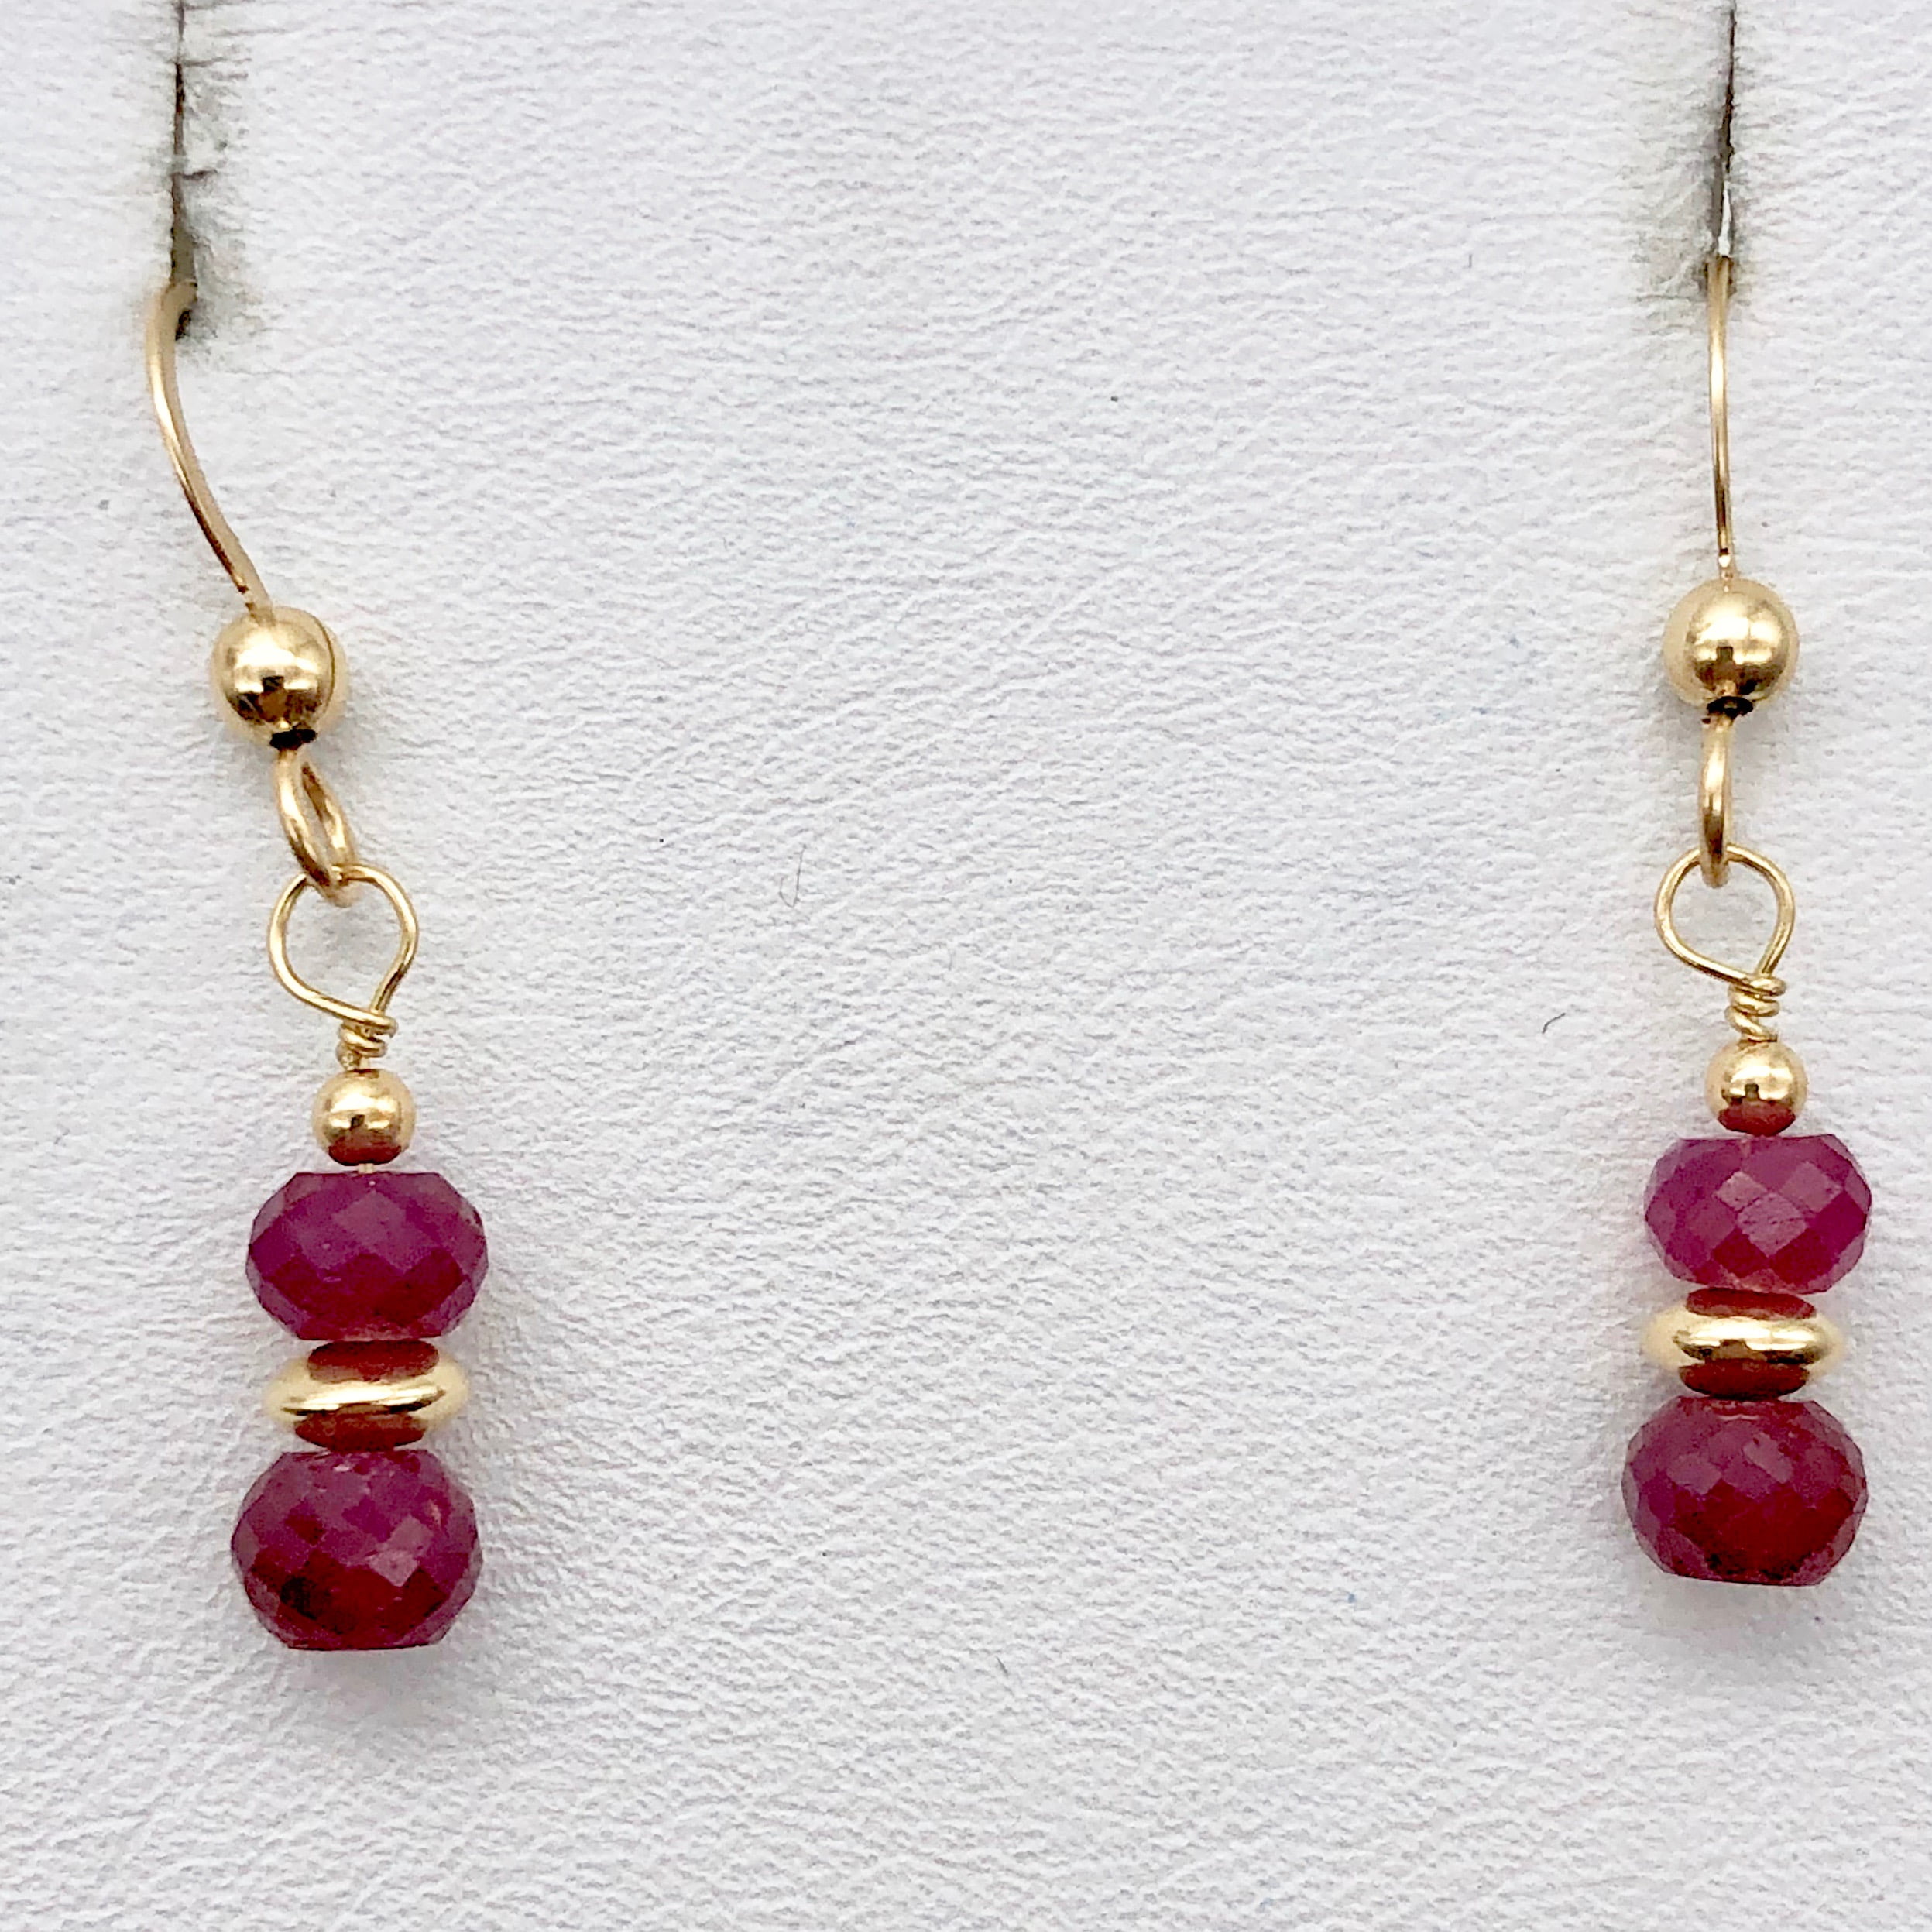 22K Gold Uncut Diamond Jhumkas - Dangle Earrings with Ruby , Emerald & Beads  - 235-DJH009 in 16.800 Grams